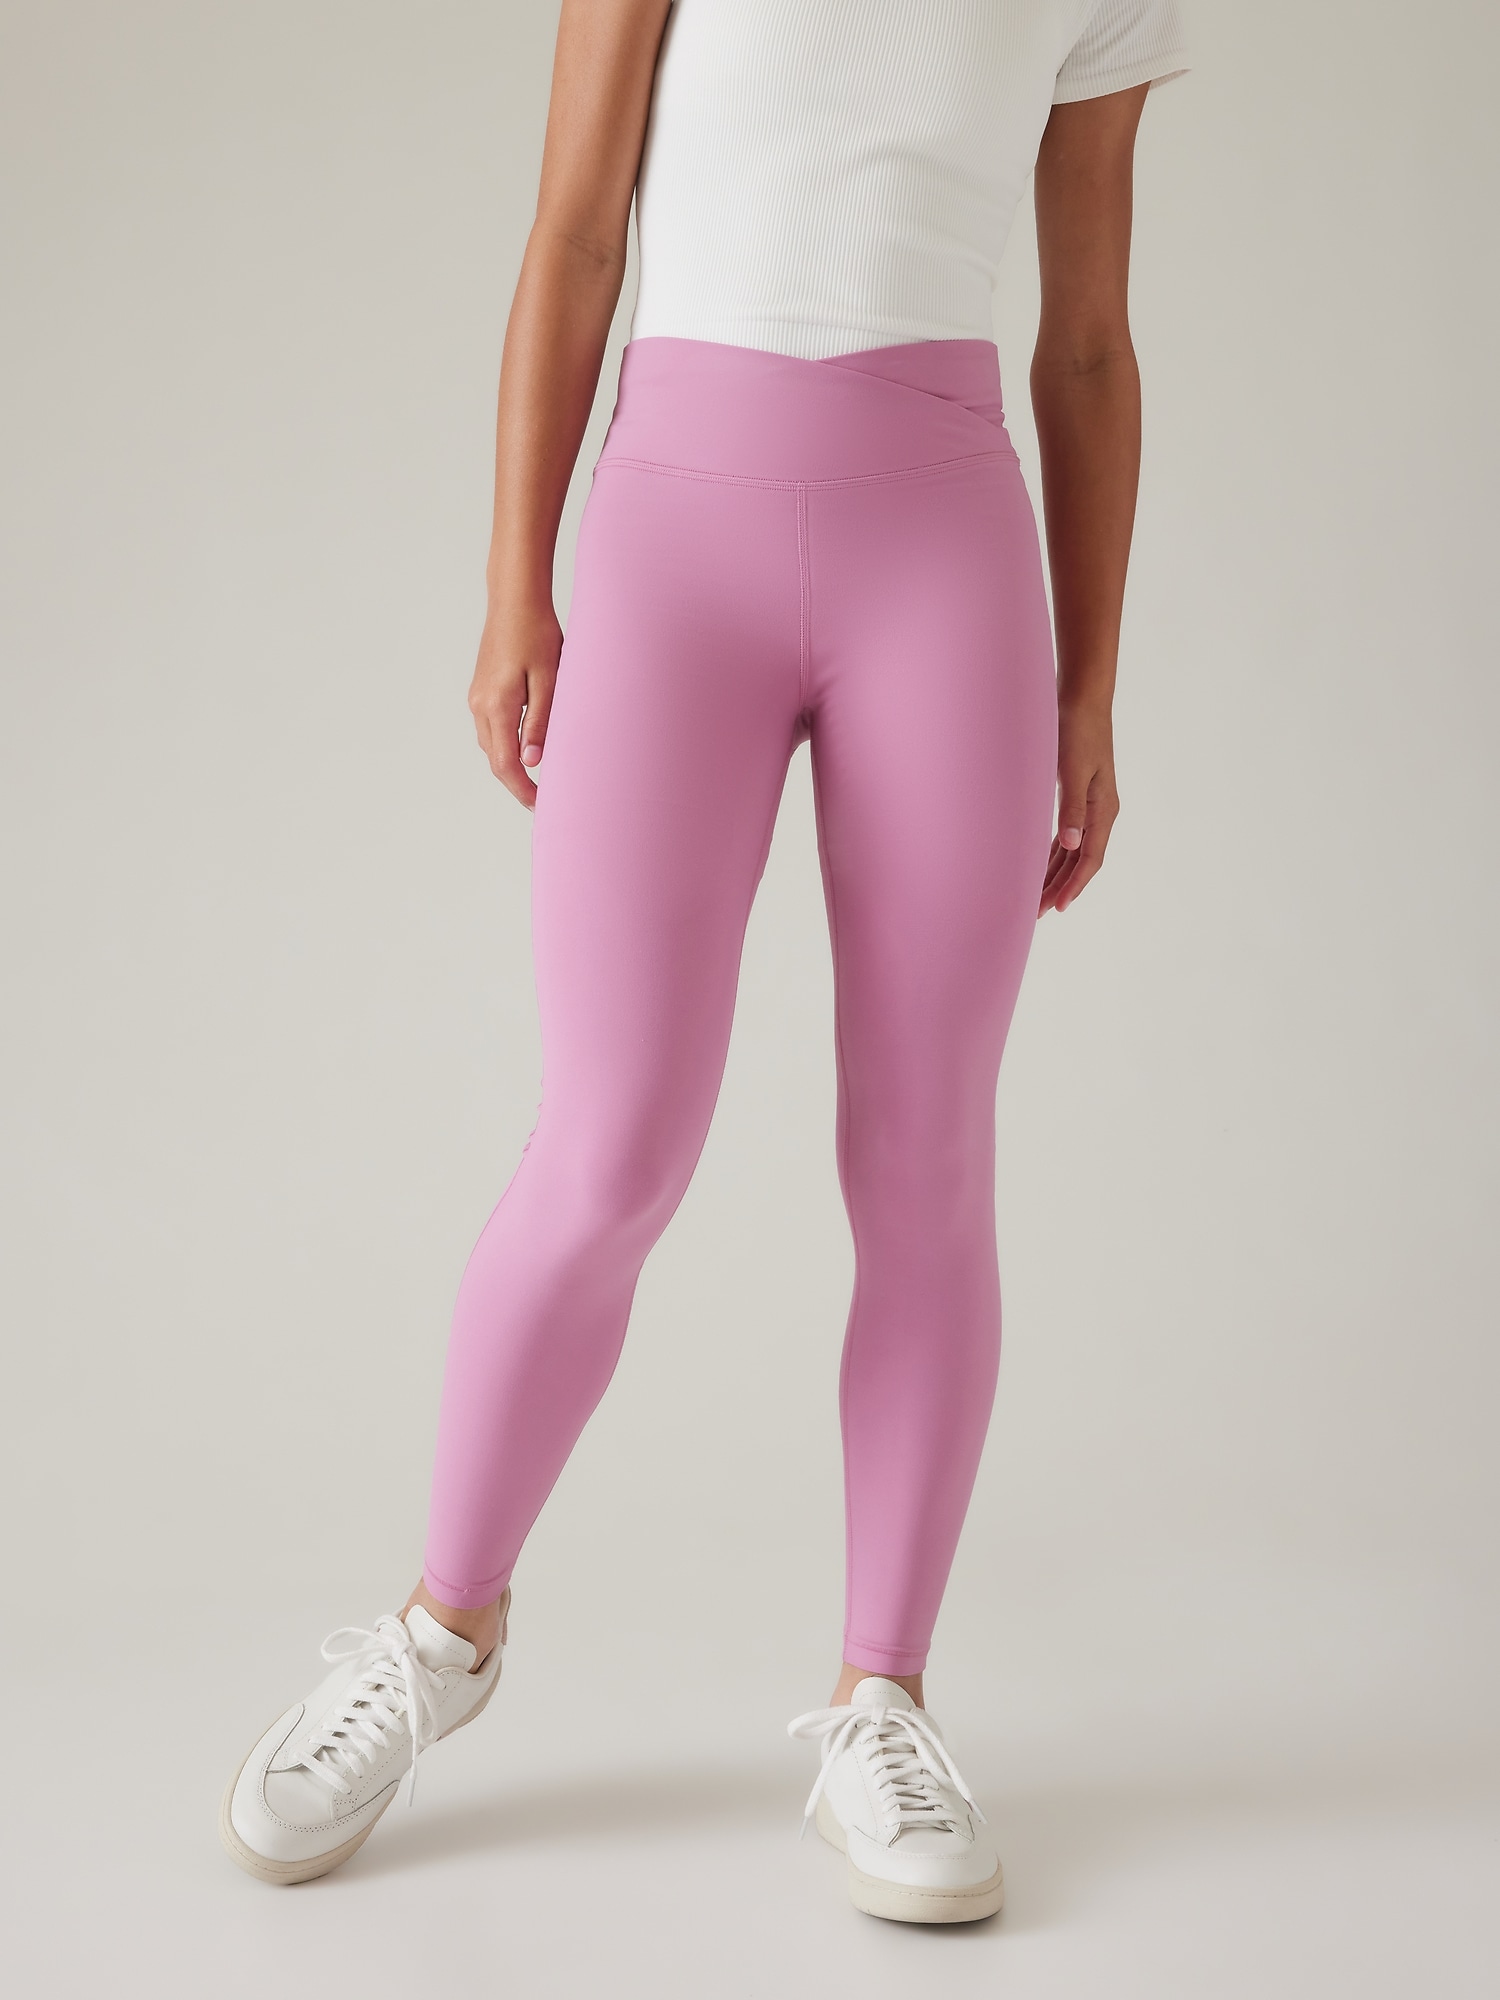 Athleta Leggings Women's Large Pink Transcend Stash Tight Casual Yoga Gym  Dance : r/gym_apparel_for_women